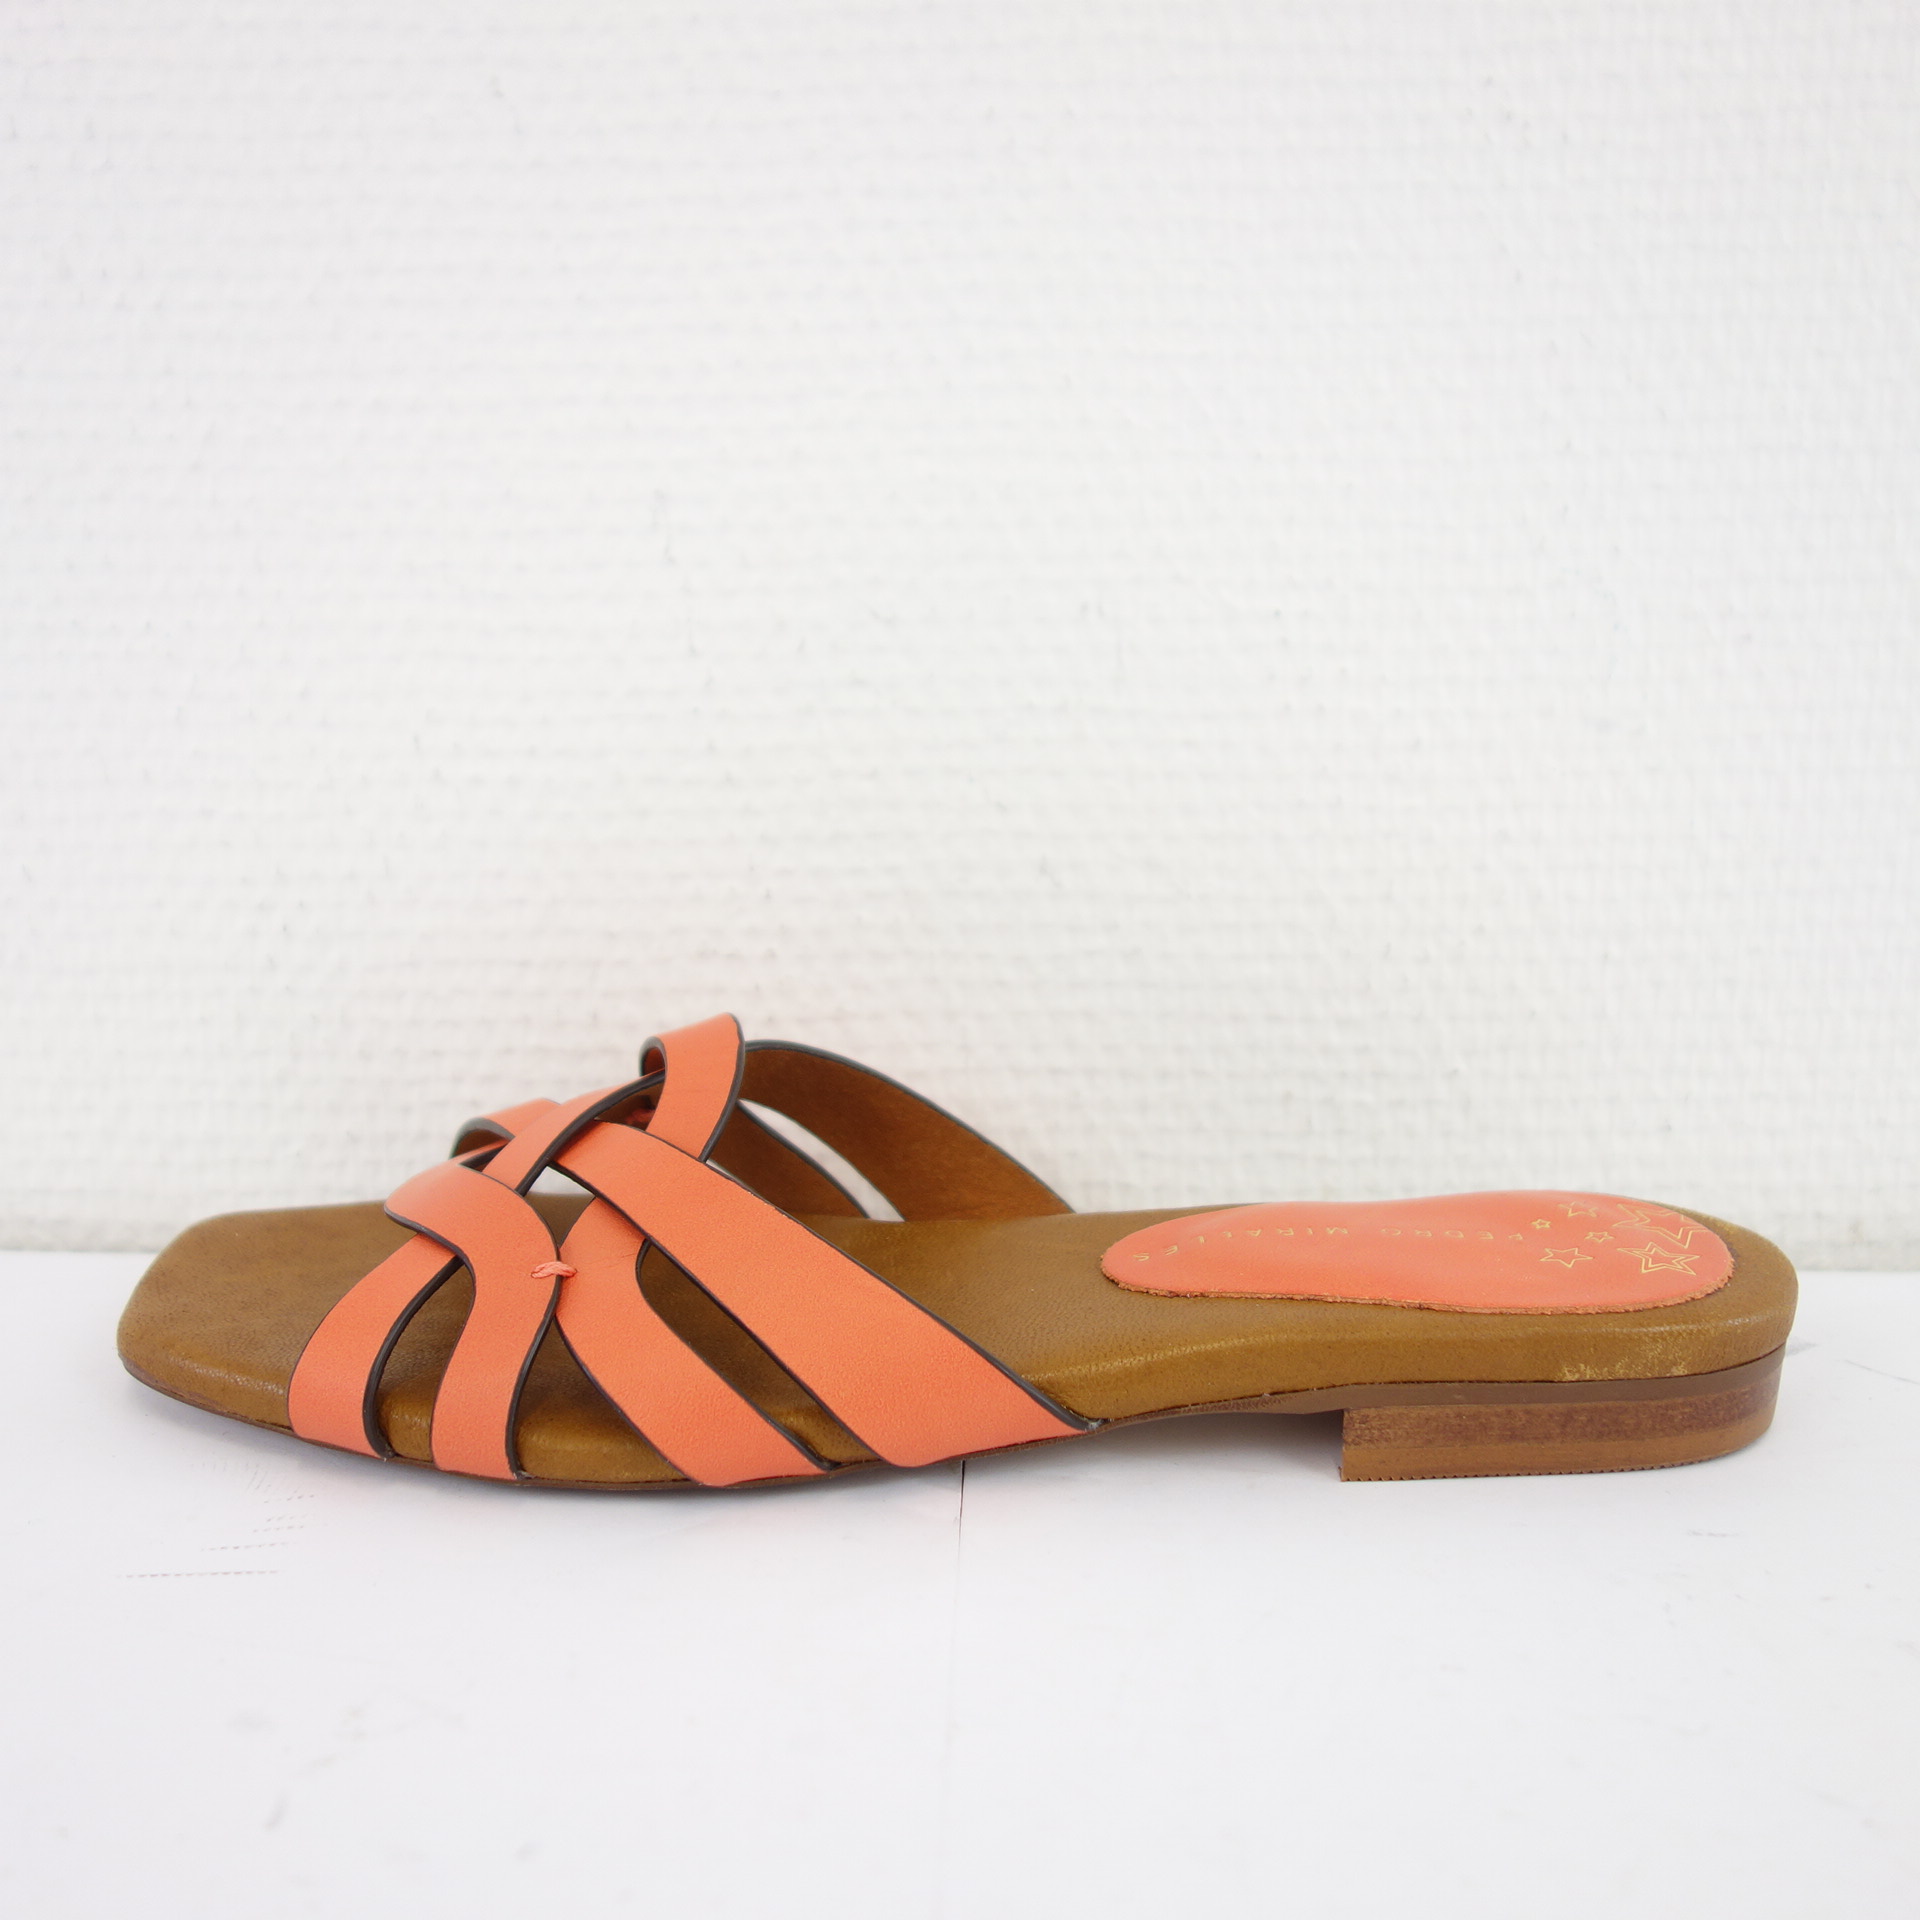 PEDRO MIRALLES Damen Schuhe Damenschuhe Sandalen Slipper Braun Orange Leder Größe 36